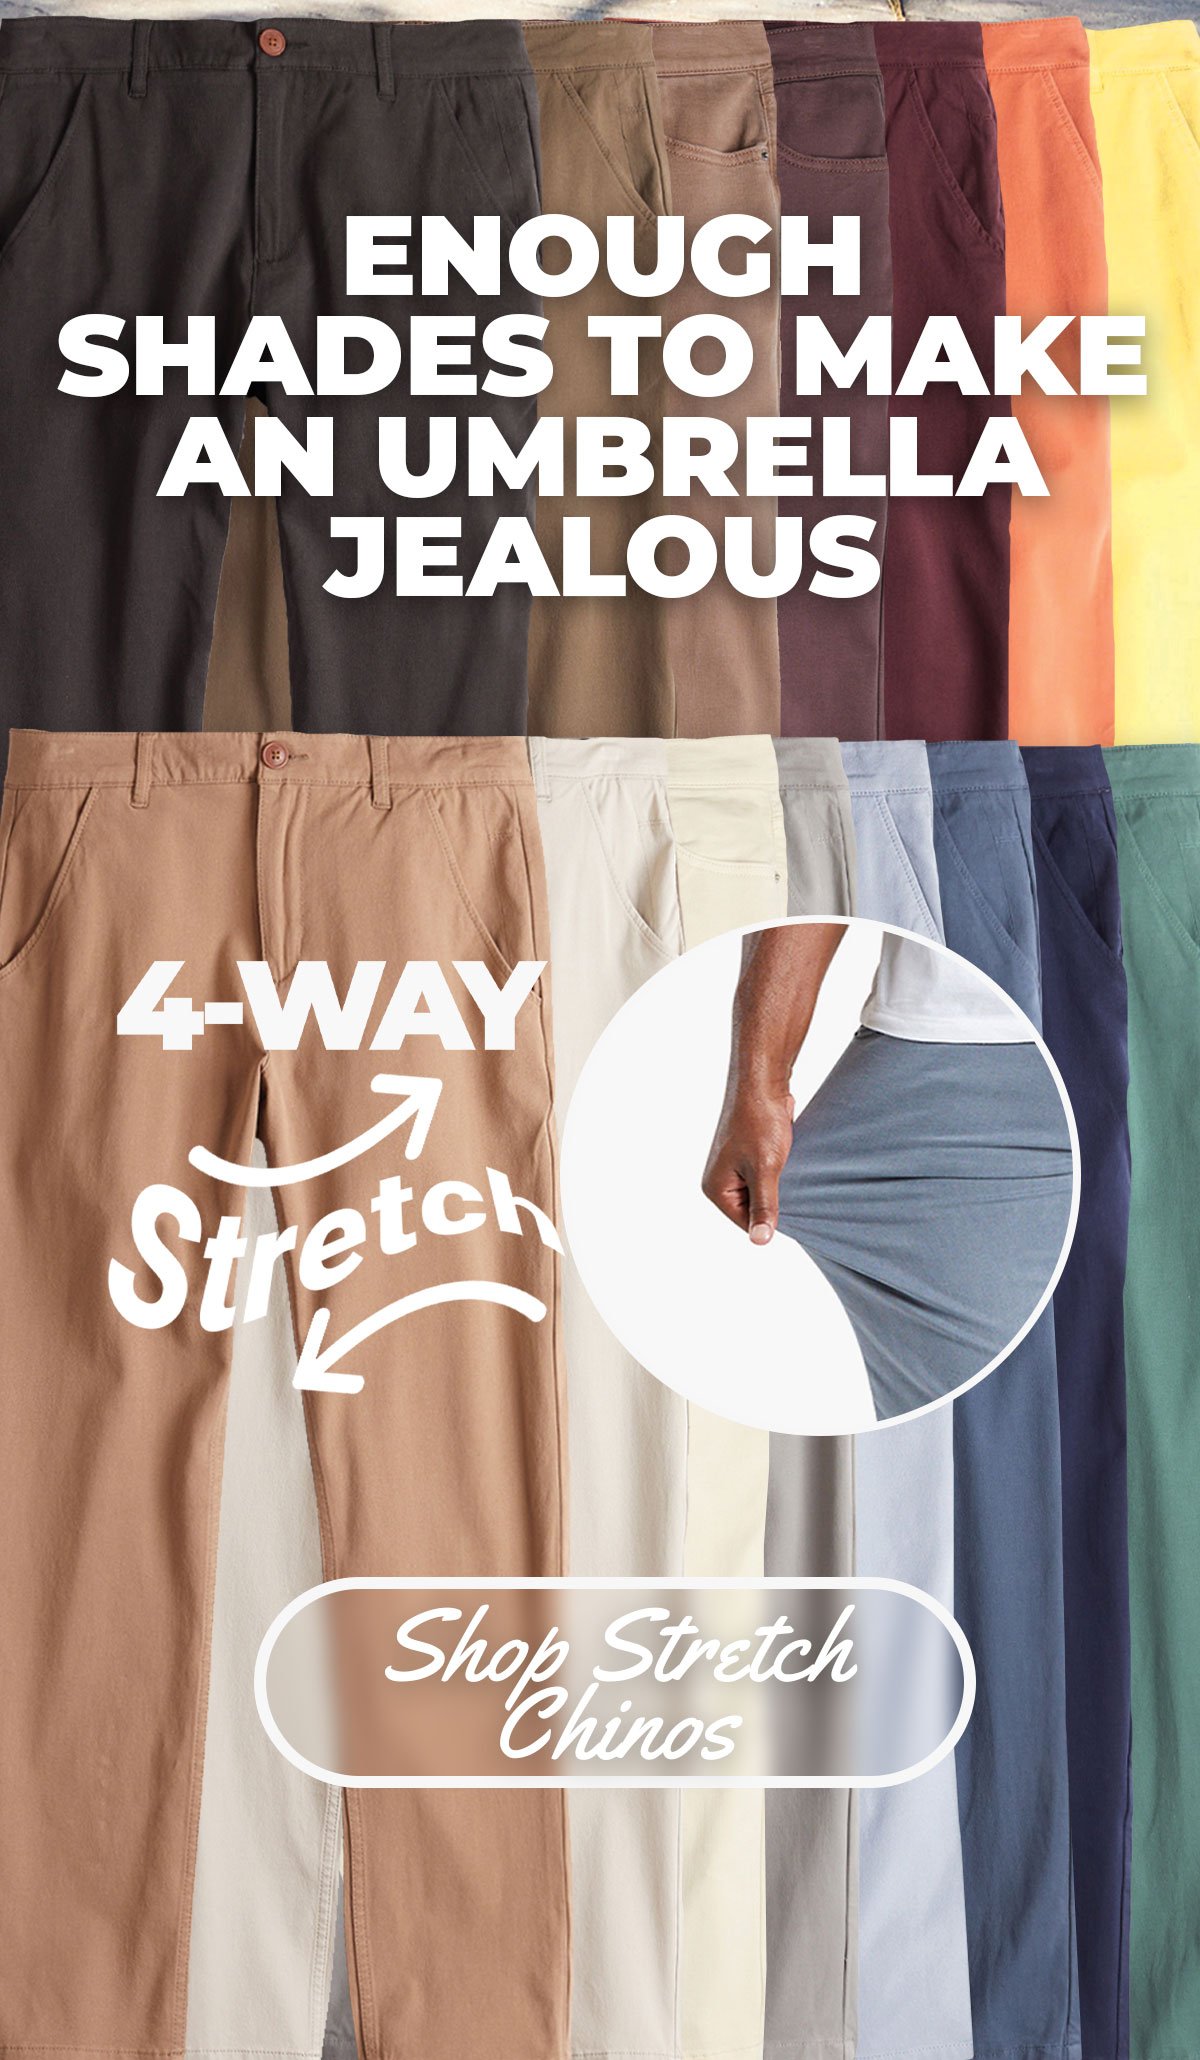 Enough shades to make an umbrella jealous. 4-way Stretch. Shop stretch chinos.